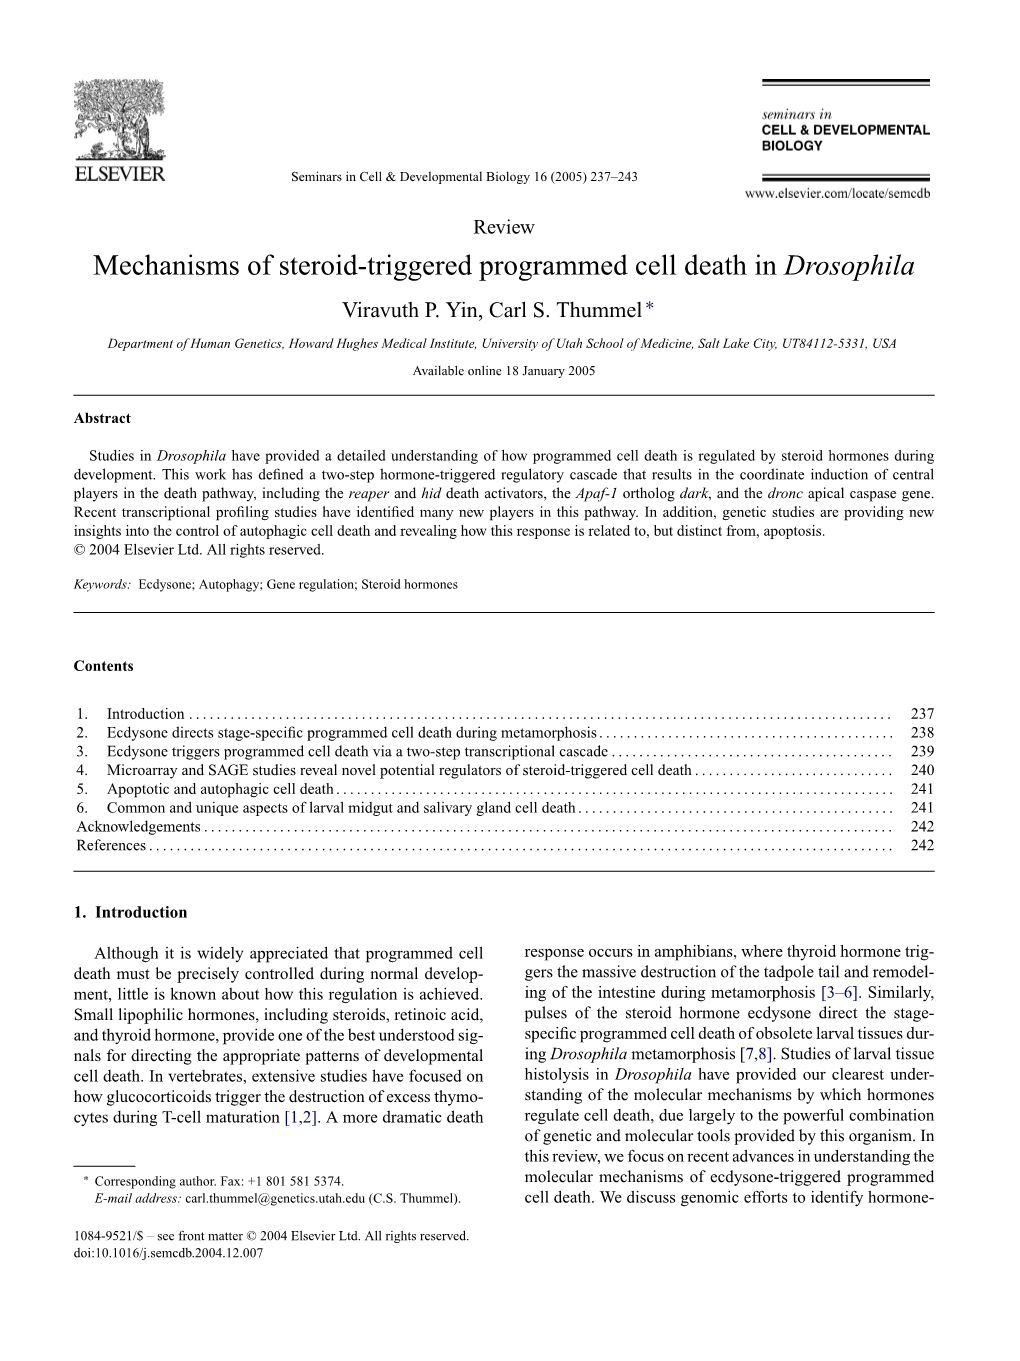 Mechanisms of Steroid-Triggered Programmed Cell Death in Drosophila Viravuth P